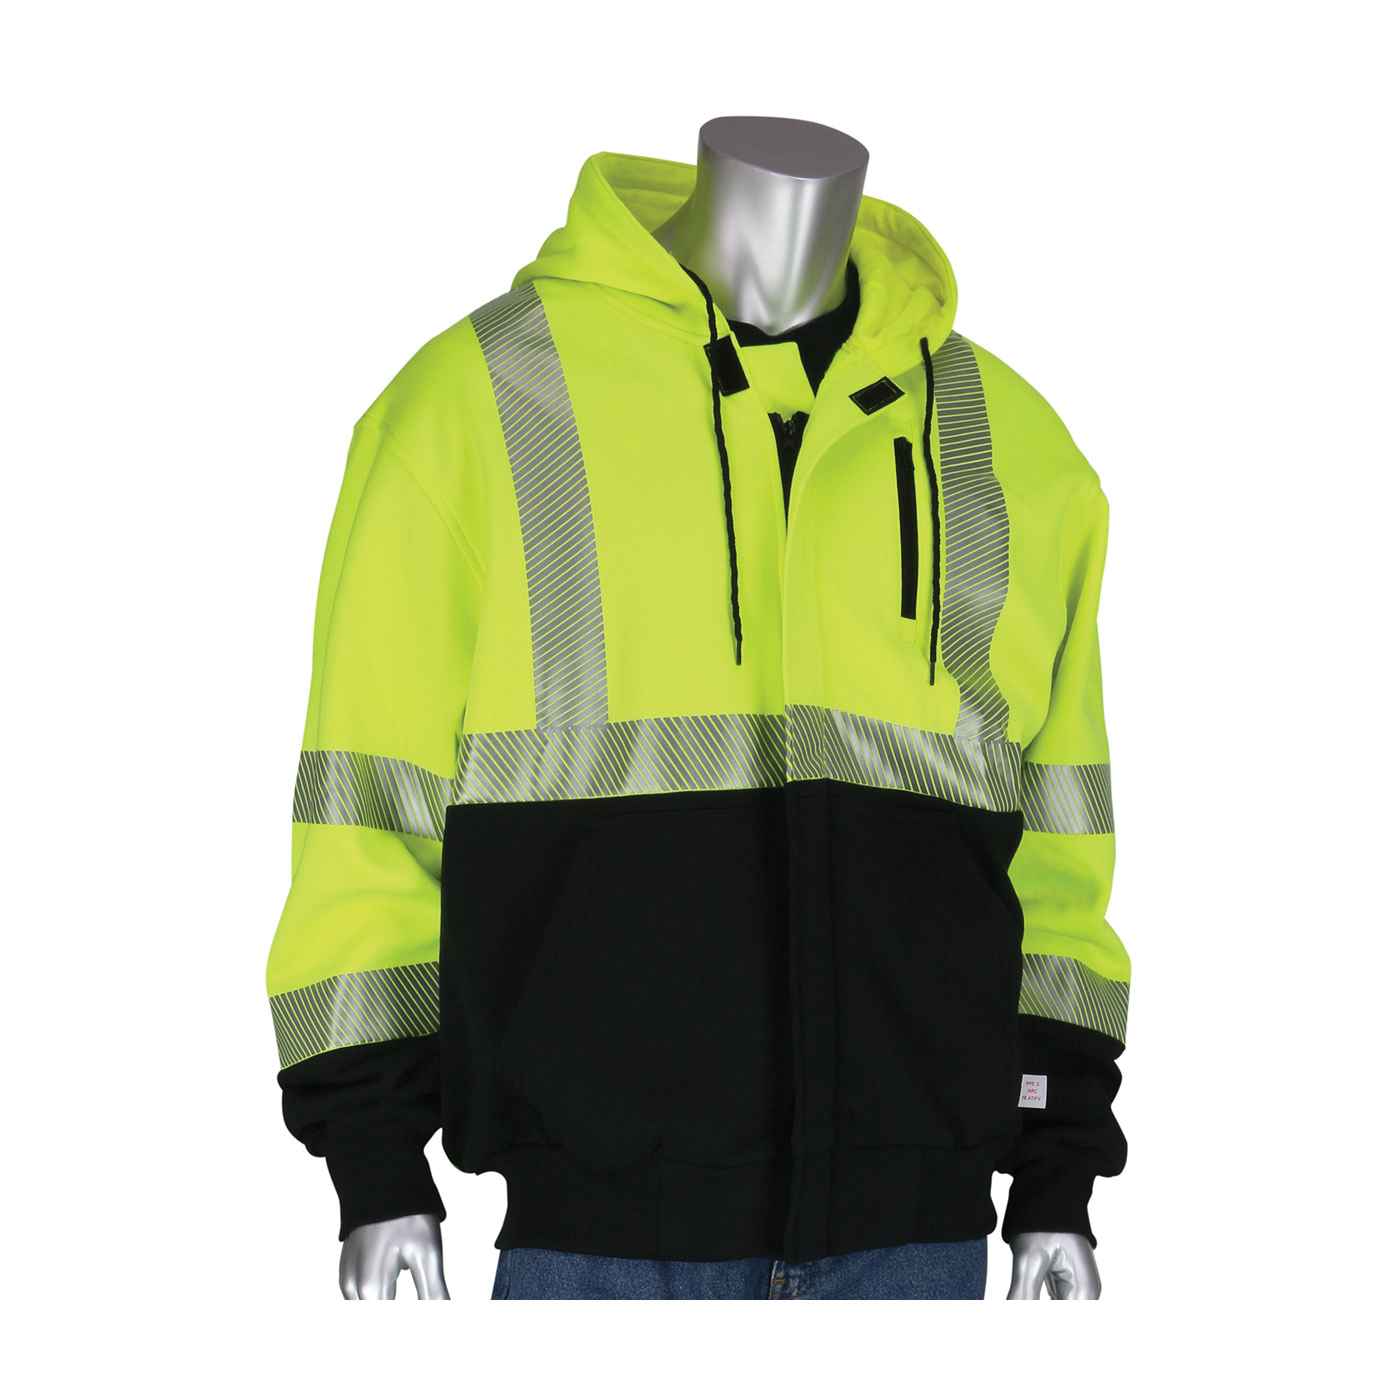 PIP® 385-1370FR-LY/5X 385-1370FR Arc and Flame Resistant Hooded Sweatshirt With Black Bottom, Unisex, 5XL, Hi-Viz Yellow/Black, 60% Modacrylic/40% Cotton, 34 in L